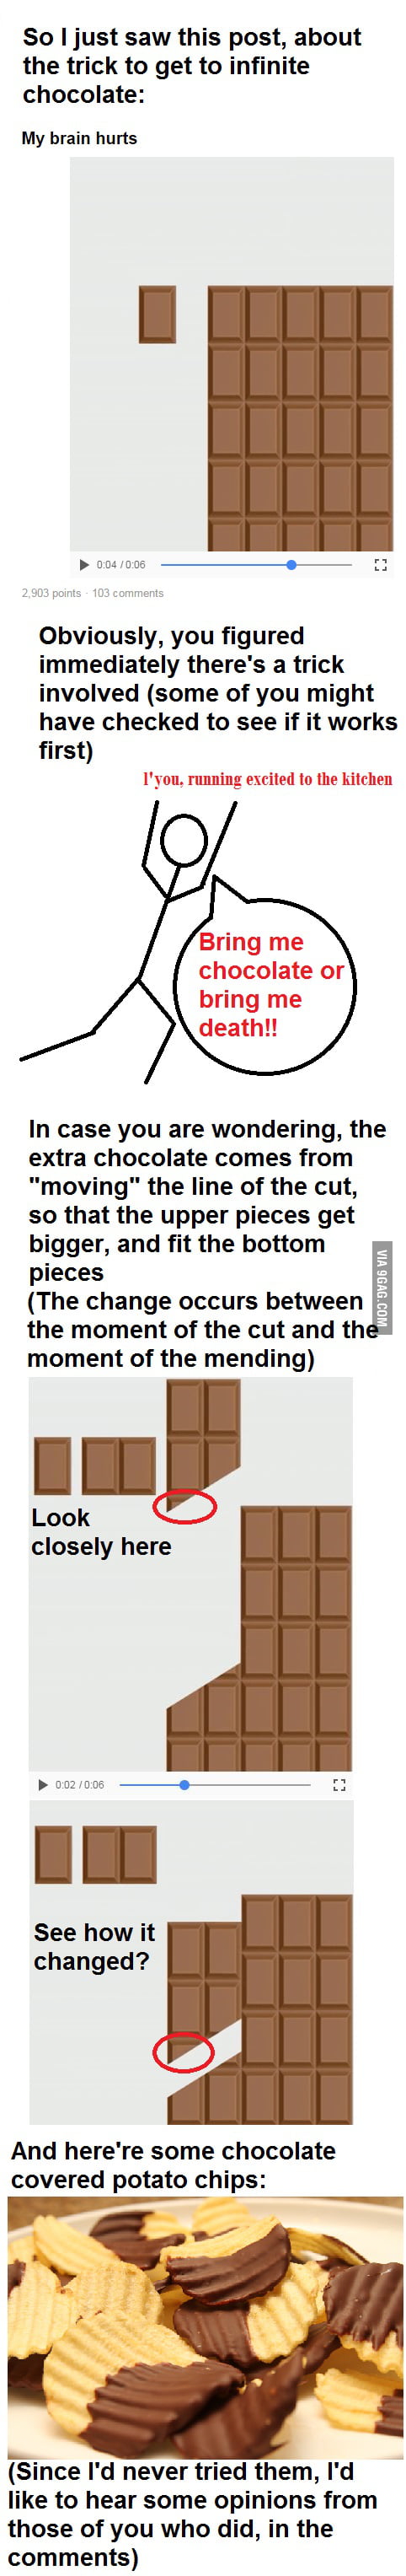 Infinite chocolate trick explanation - 9GAG